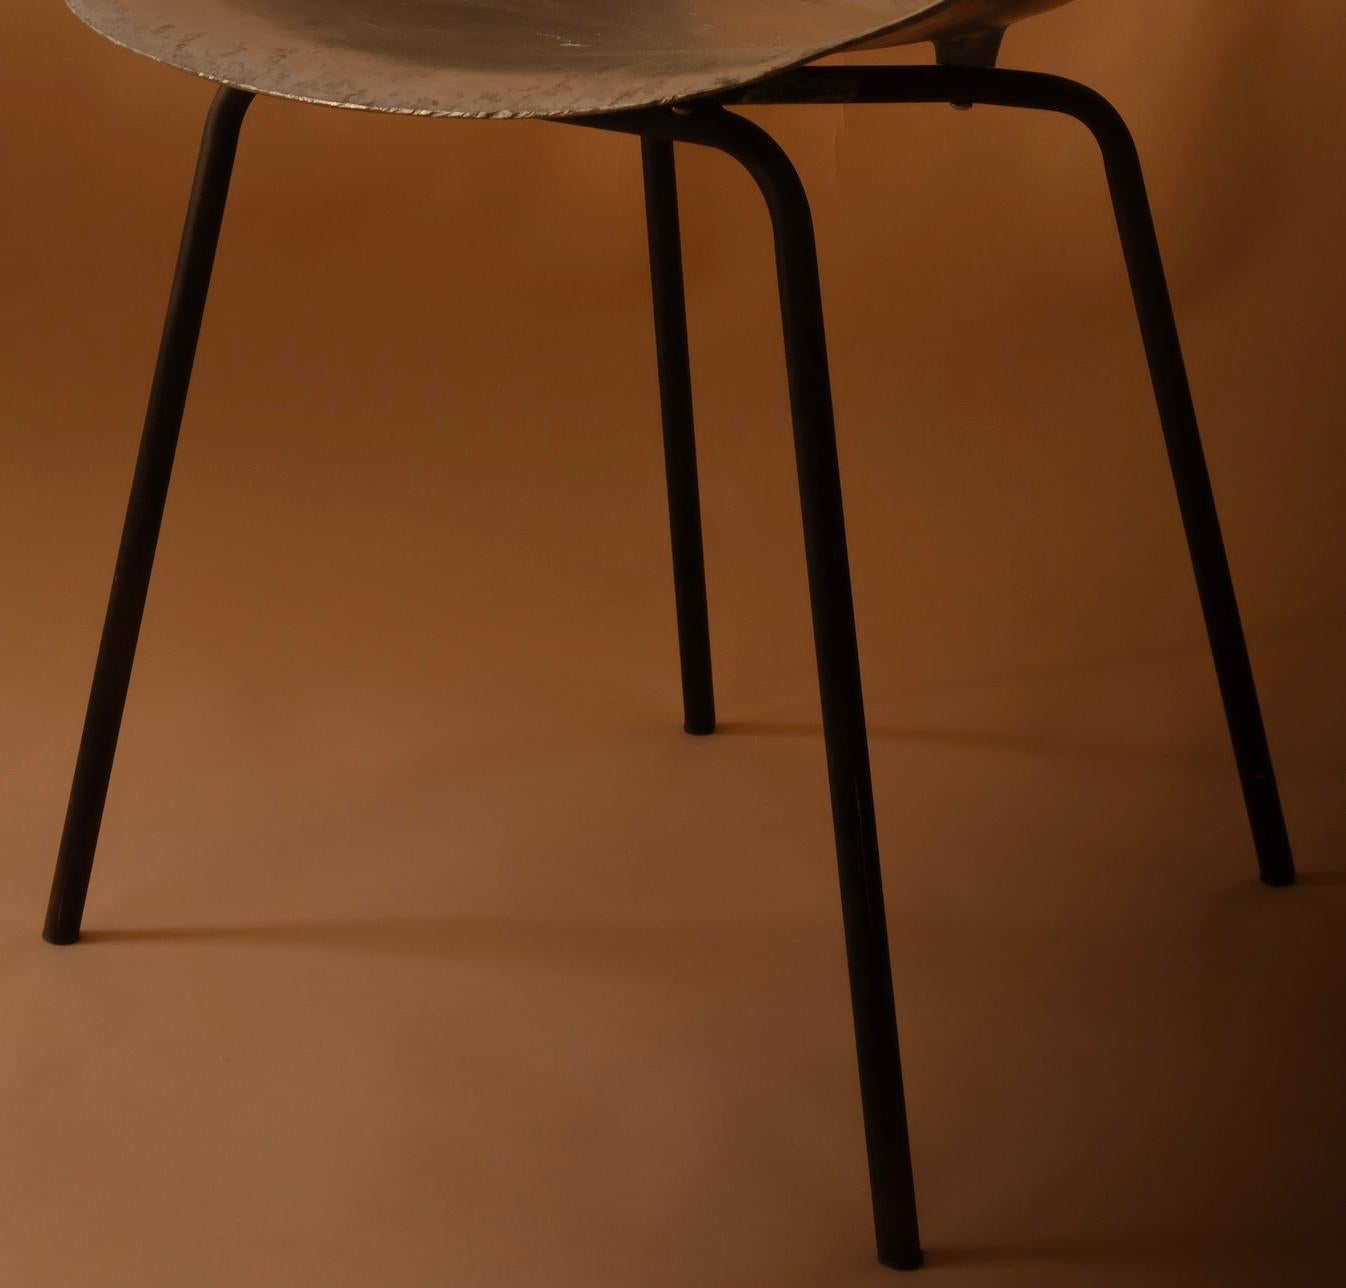 Aluminum Cast aluminium 'Tulipe' chair by Pierre Guariche. French 1950s. For Sale